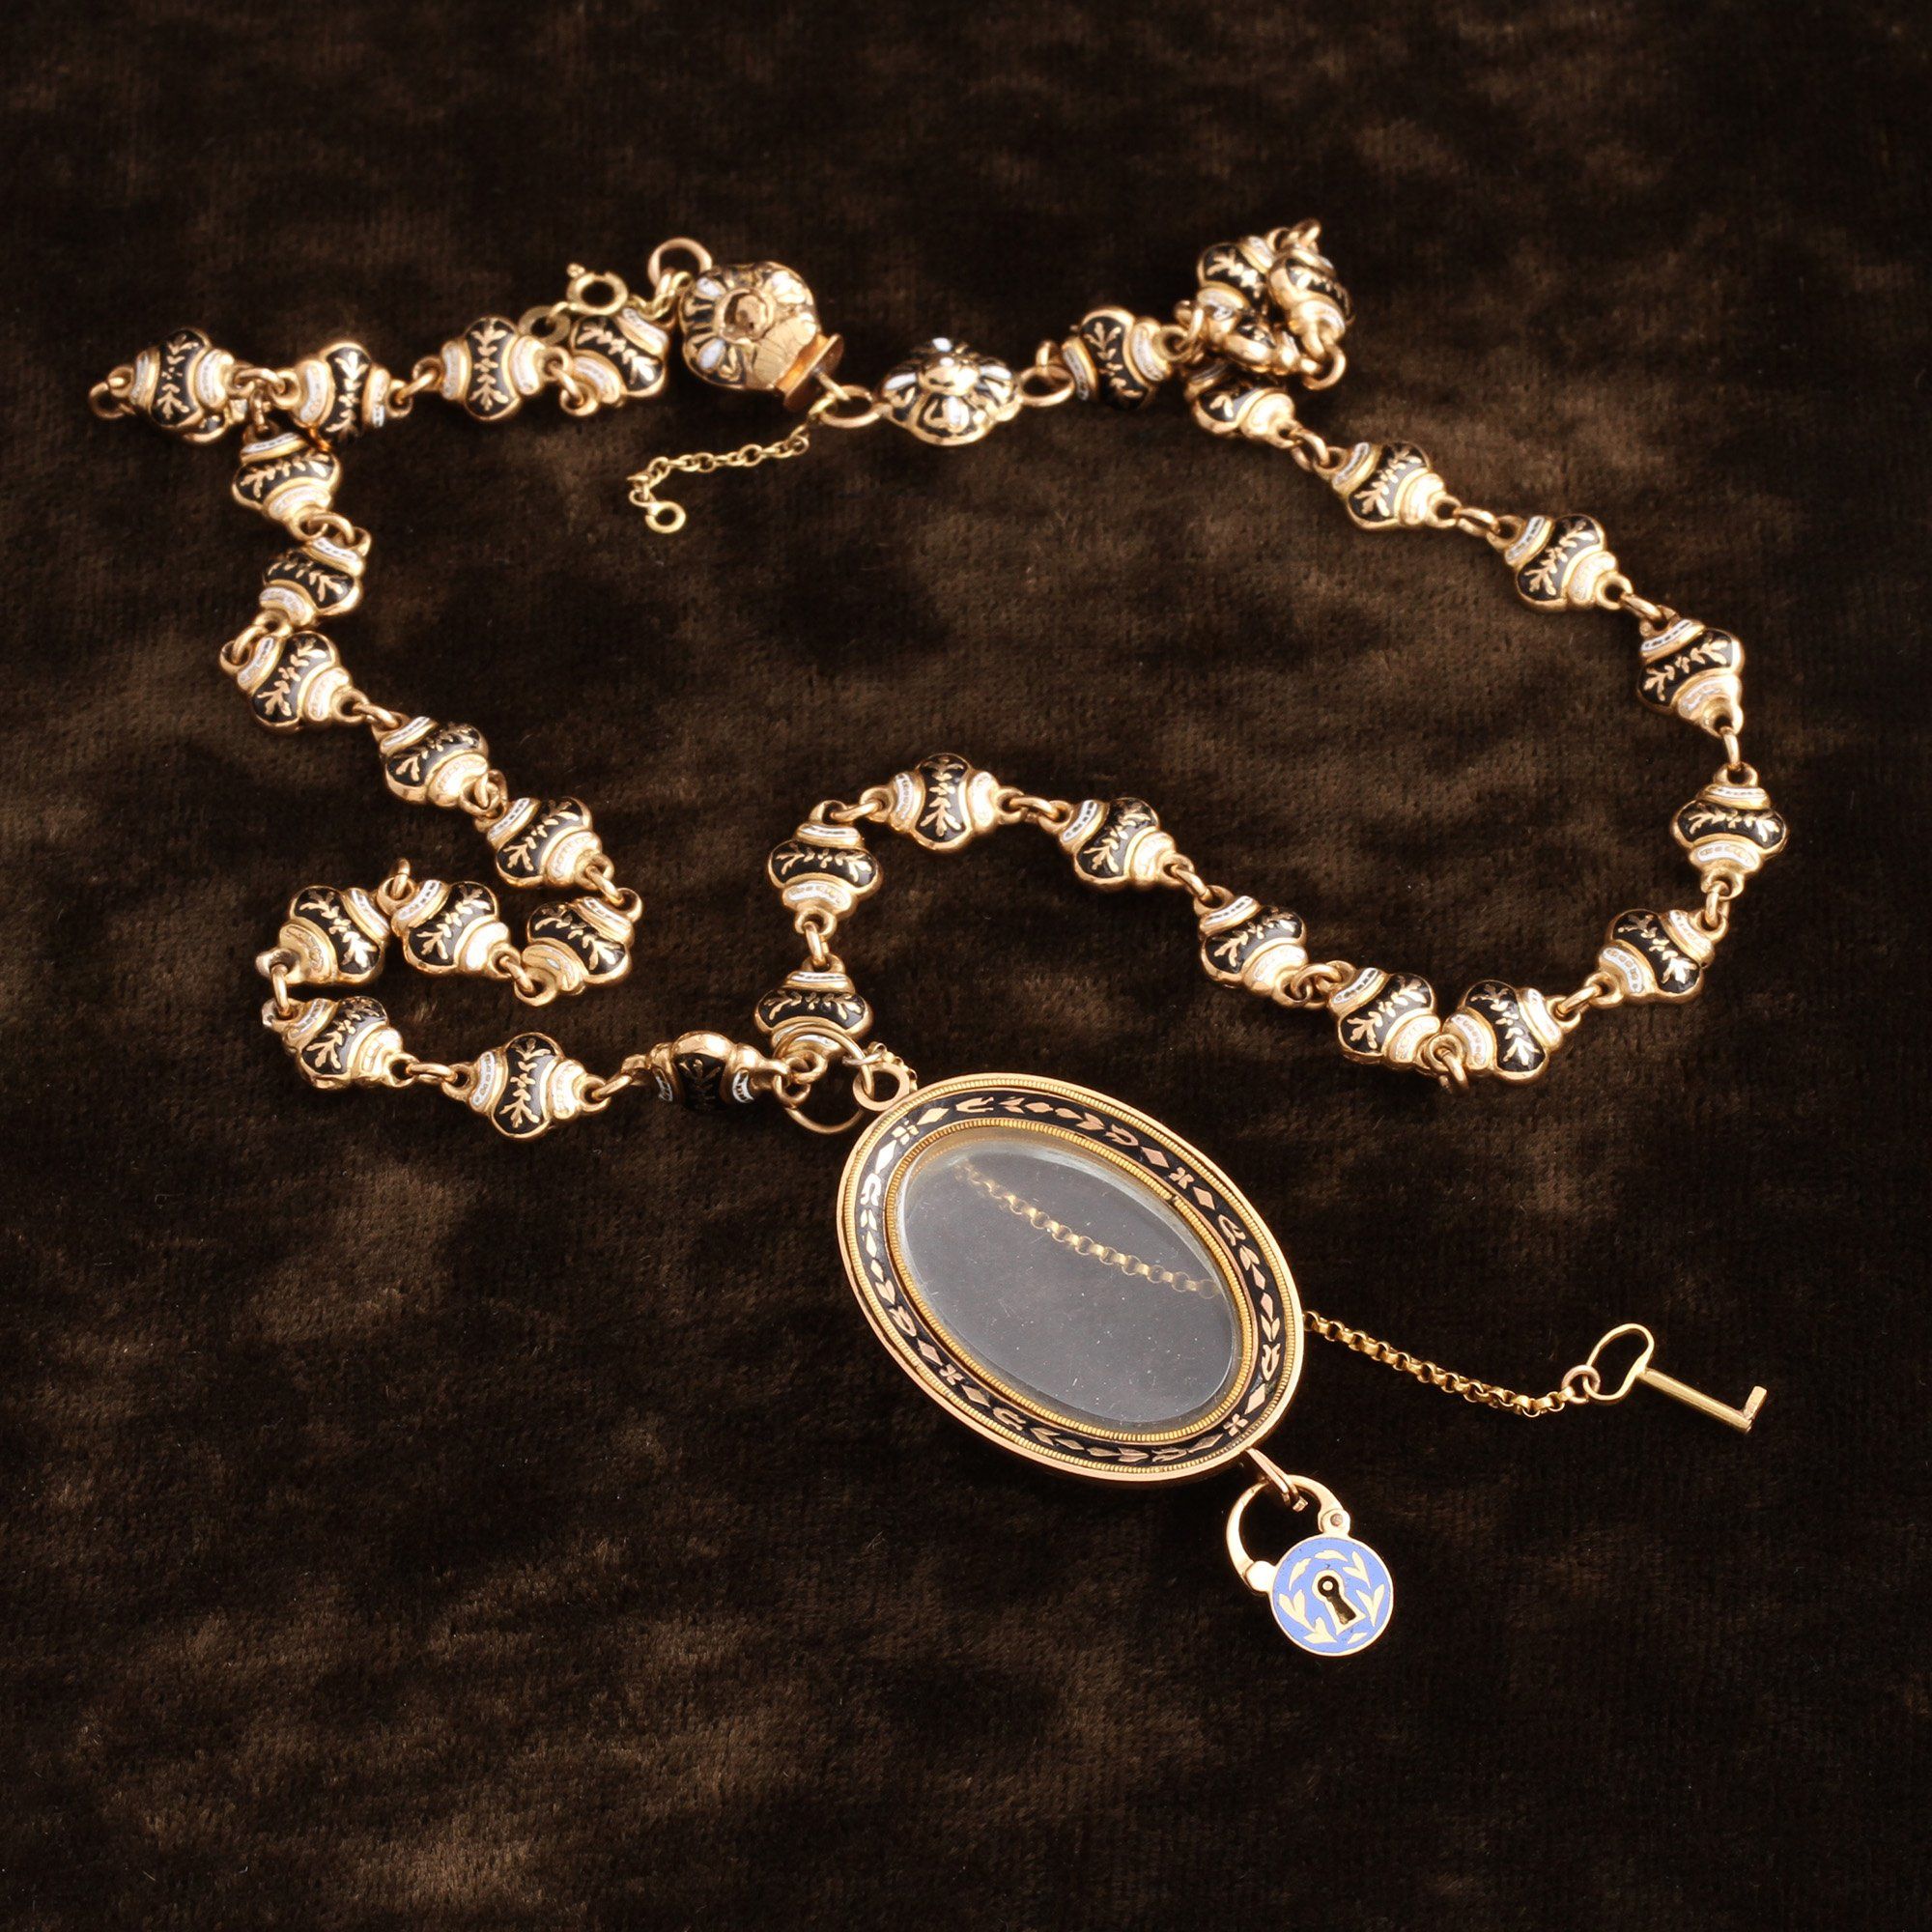 Mid 19th Century Swiss Enamel Necklace with Locket, Padlock and Key